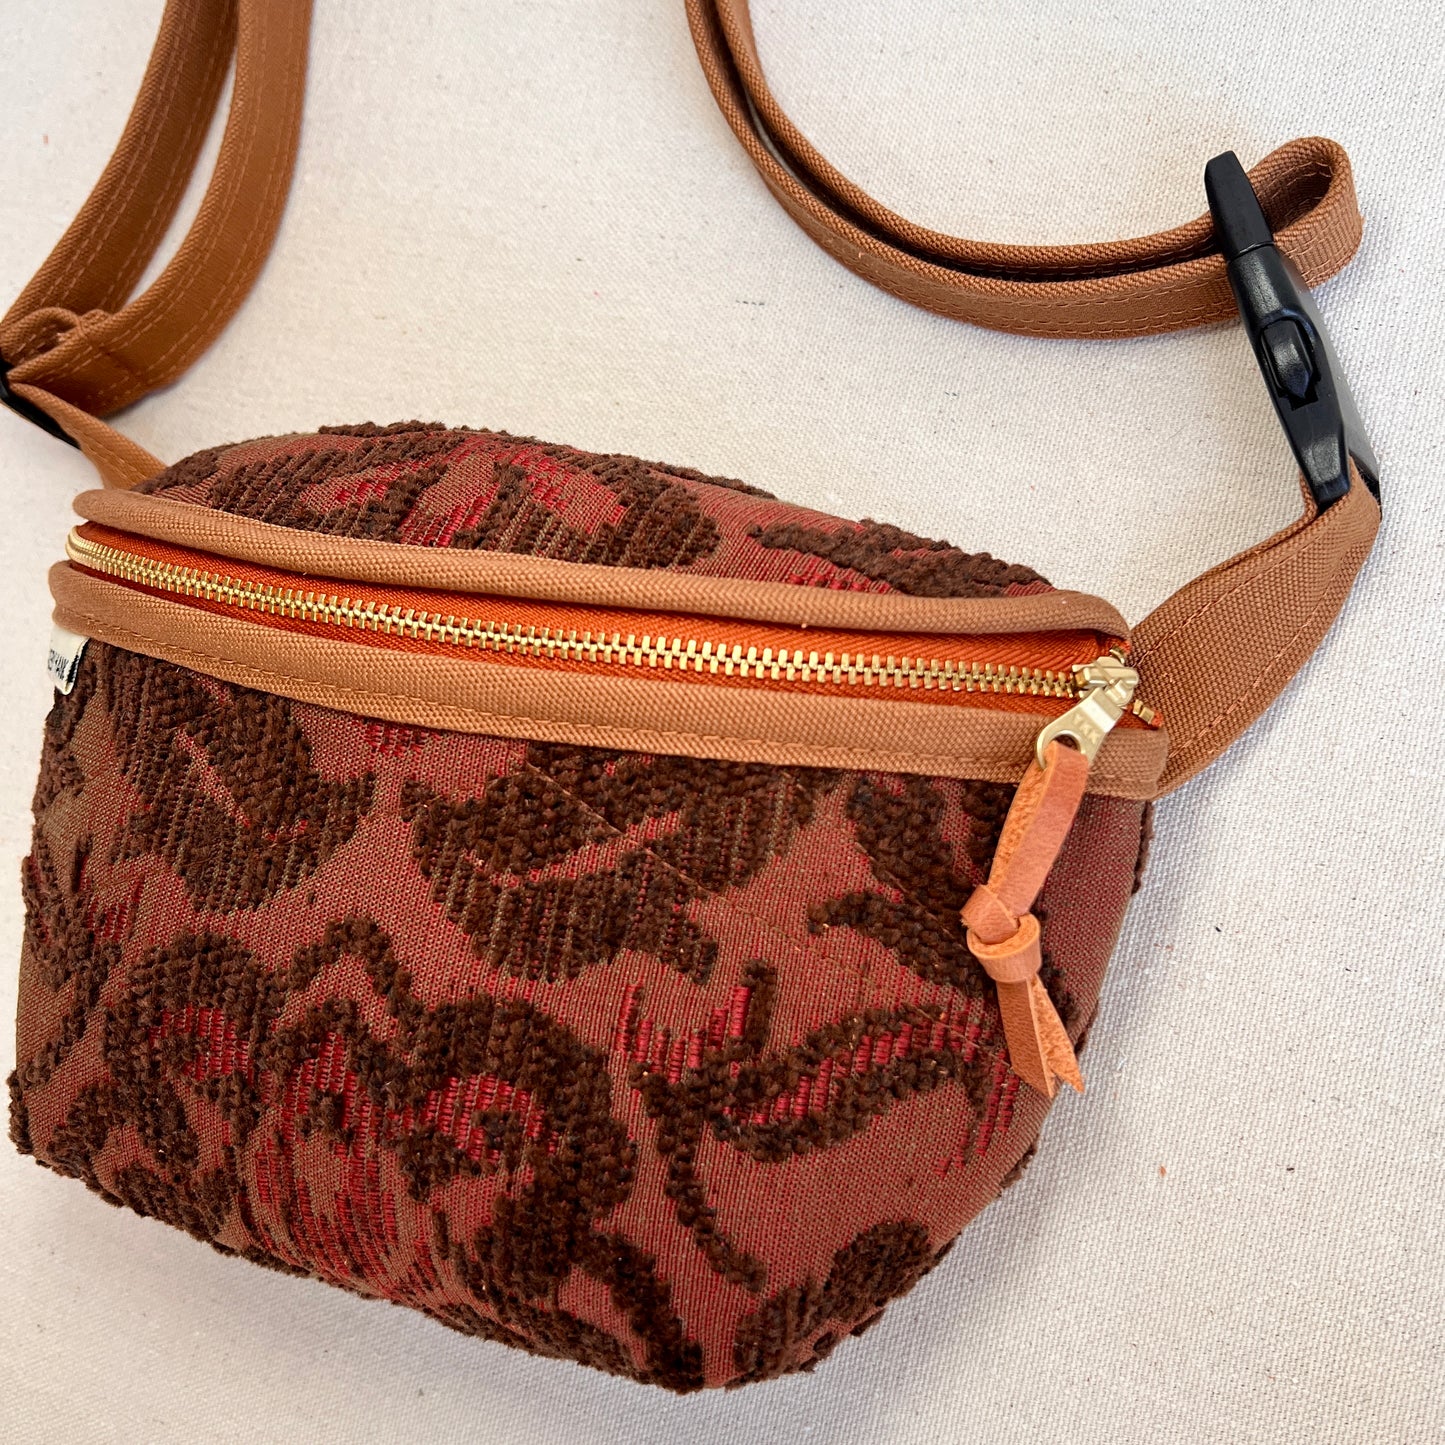 petite fanny bag in vintage chocolate + burgundy textured damask